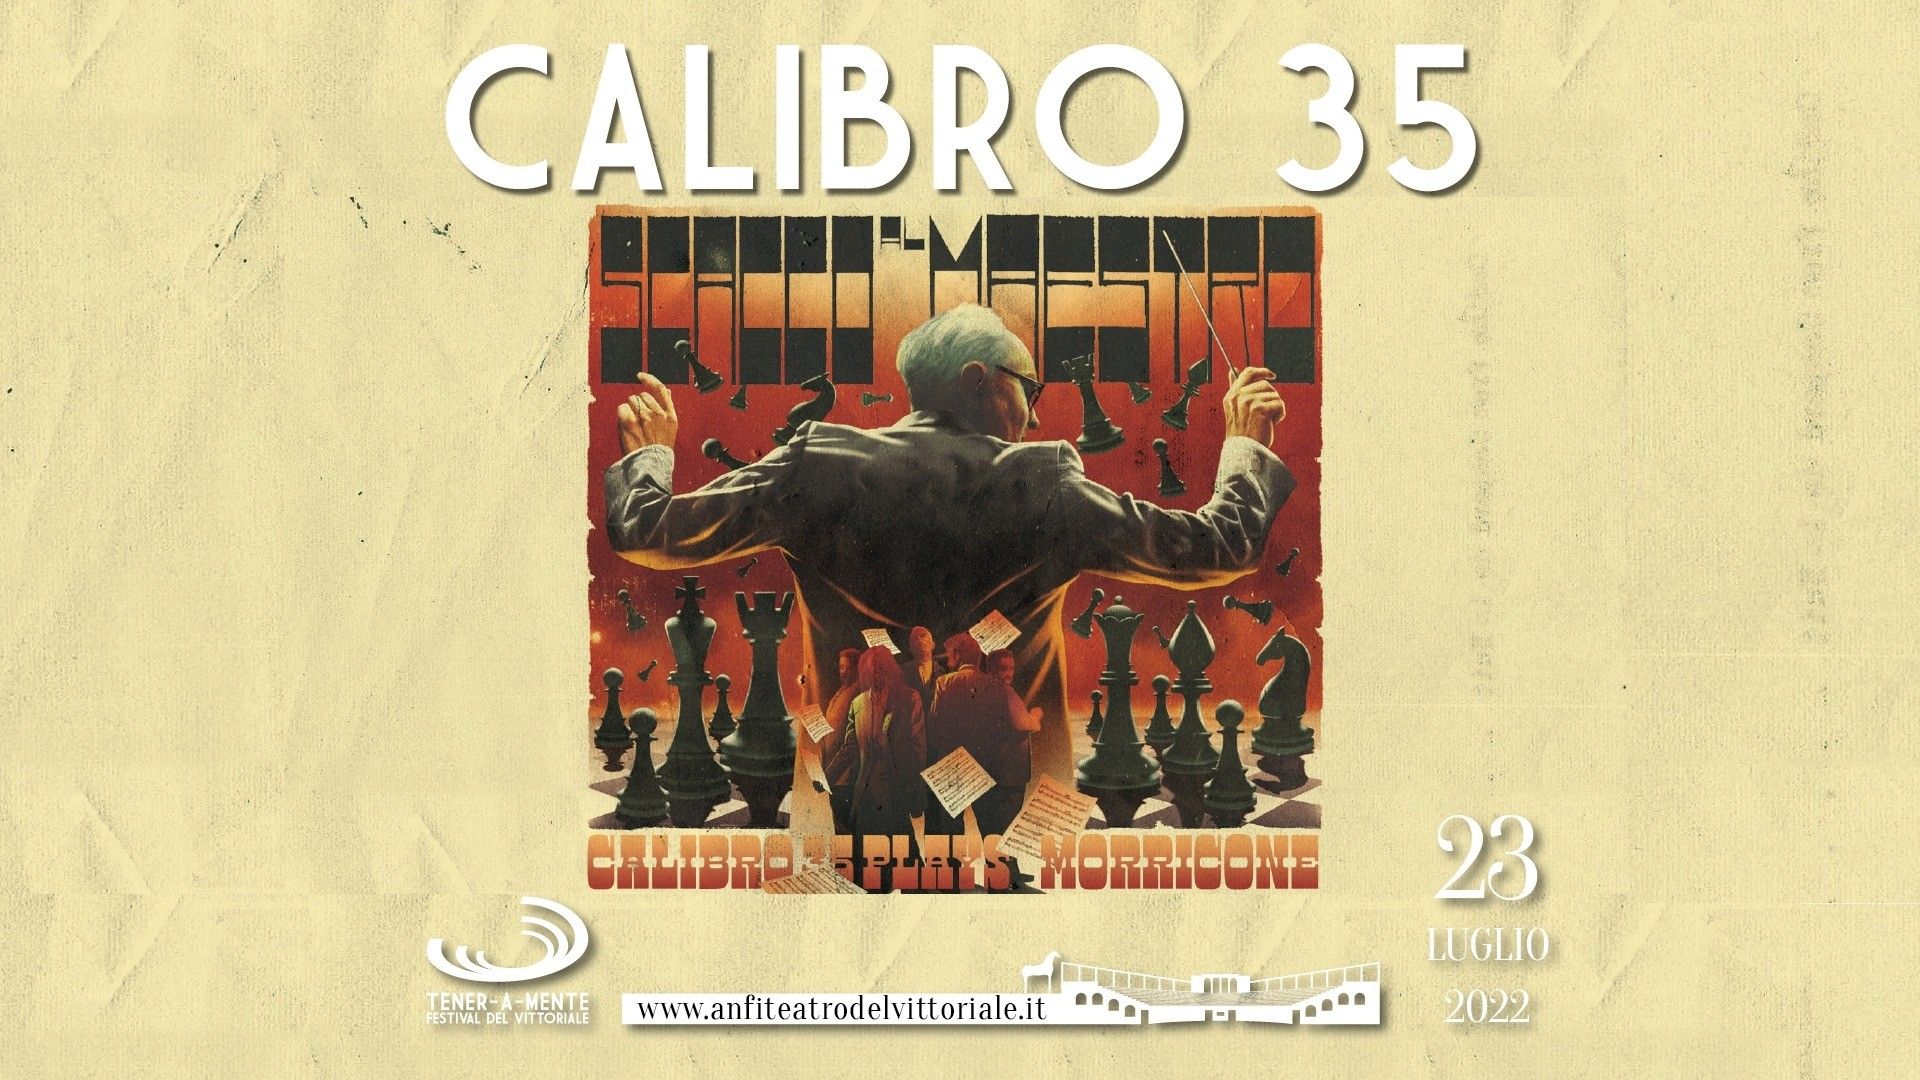 Calibro 35 plays Morricone